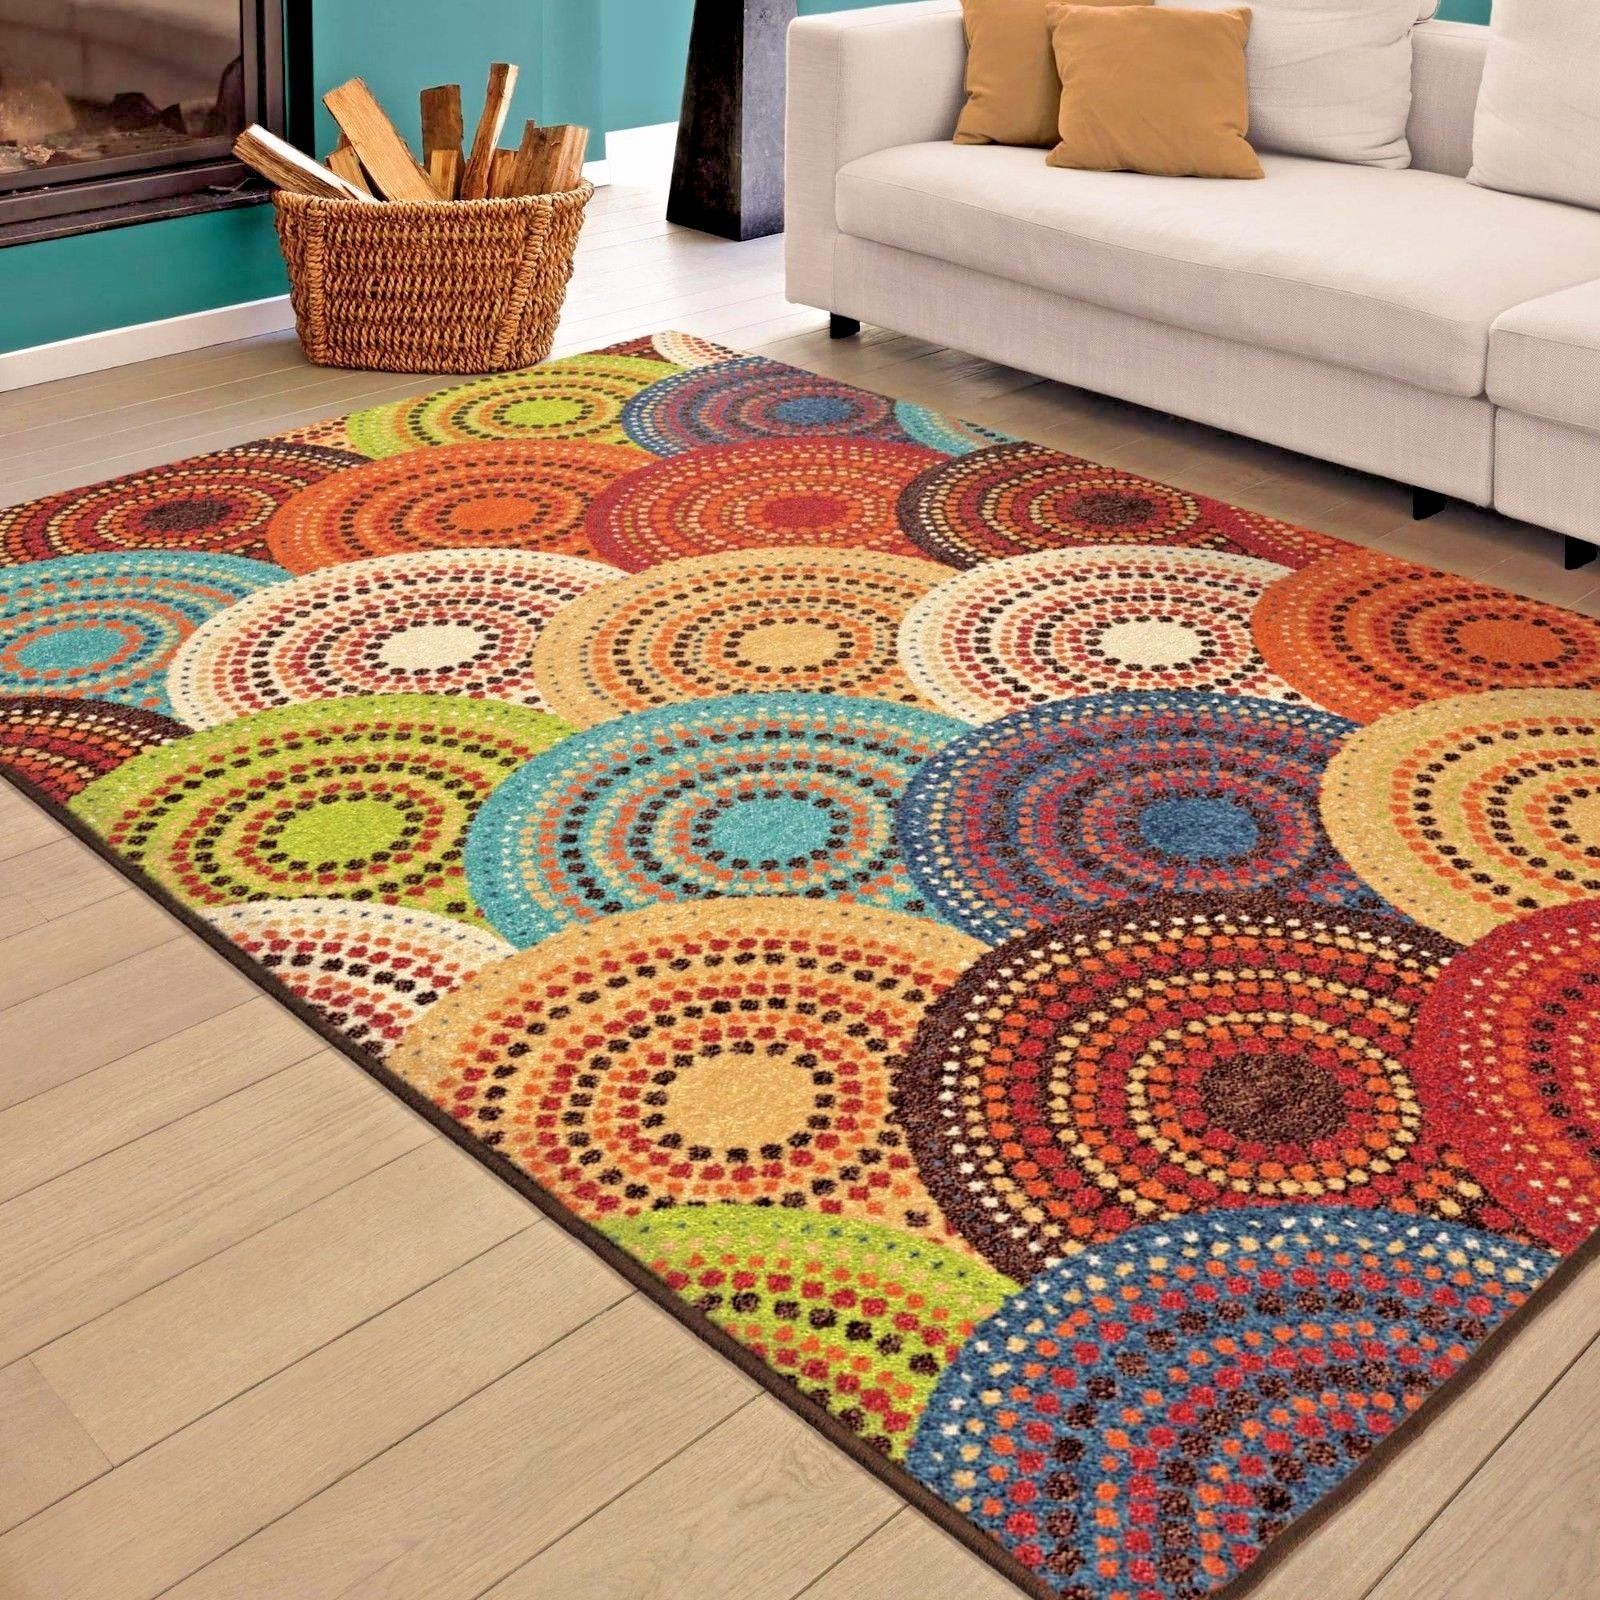 cool rugs rugs area rugs carpet 8x10 area rug floor modern colorful large big cool VSXCDSM